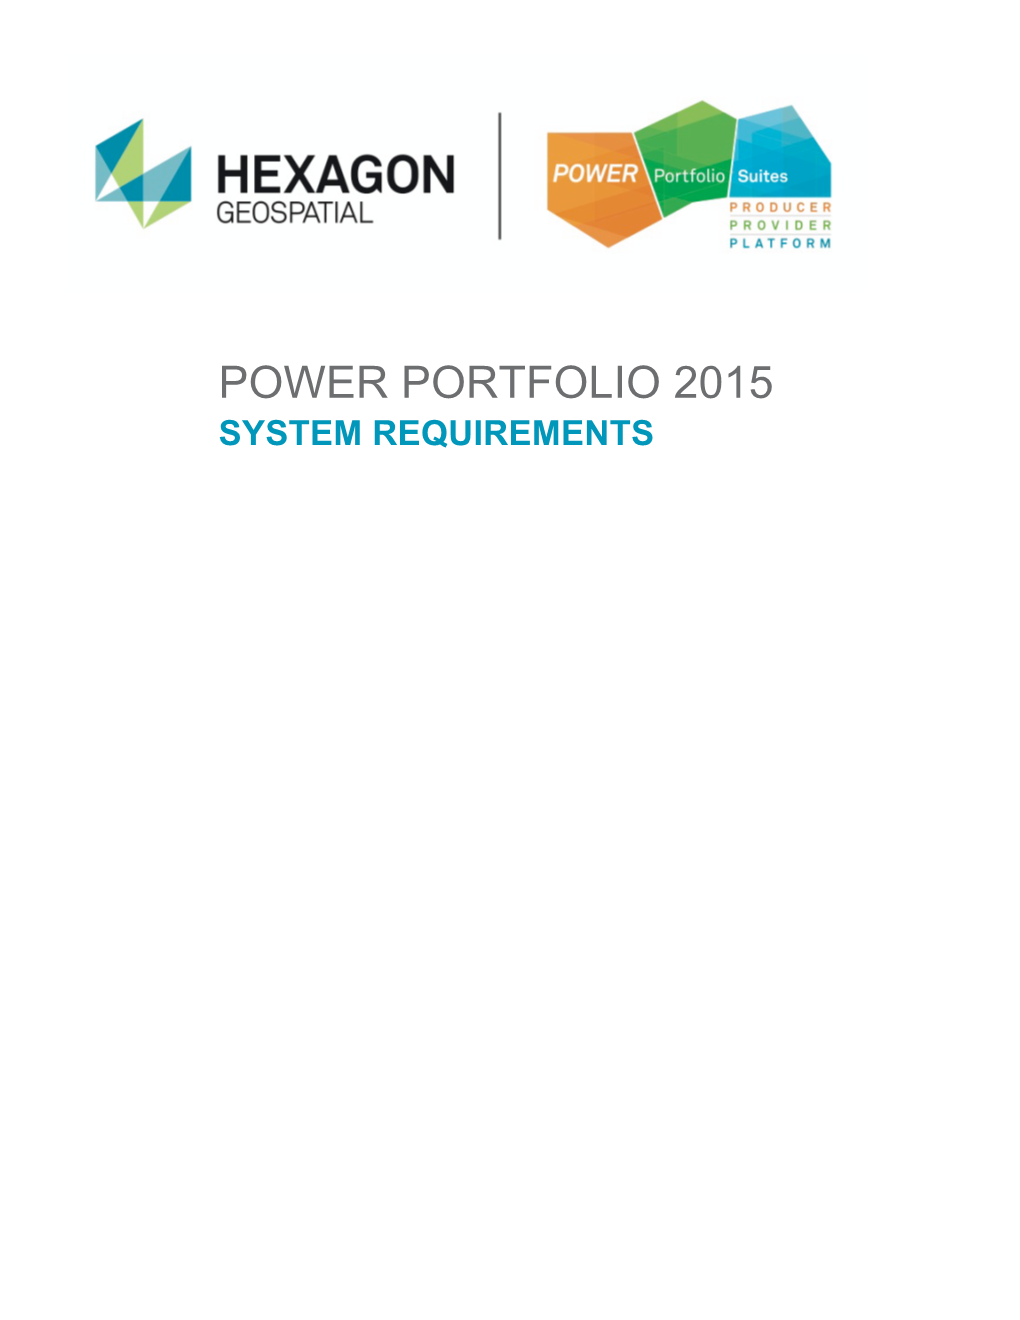 Power Portfolio 2015 System Requirements